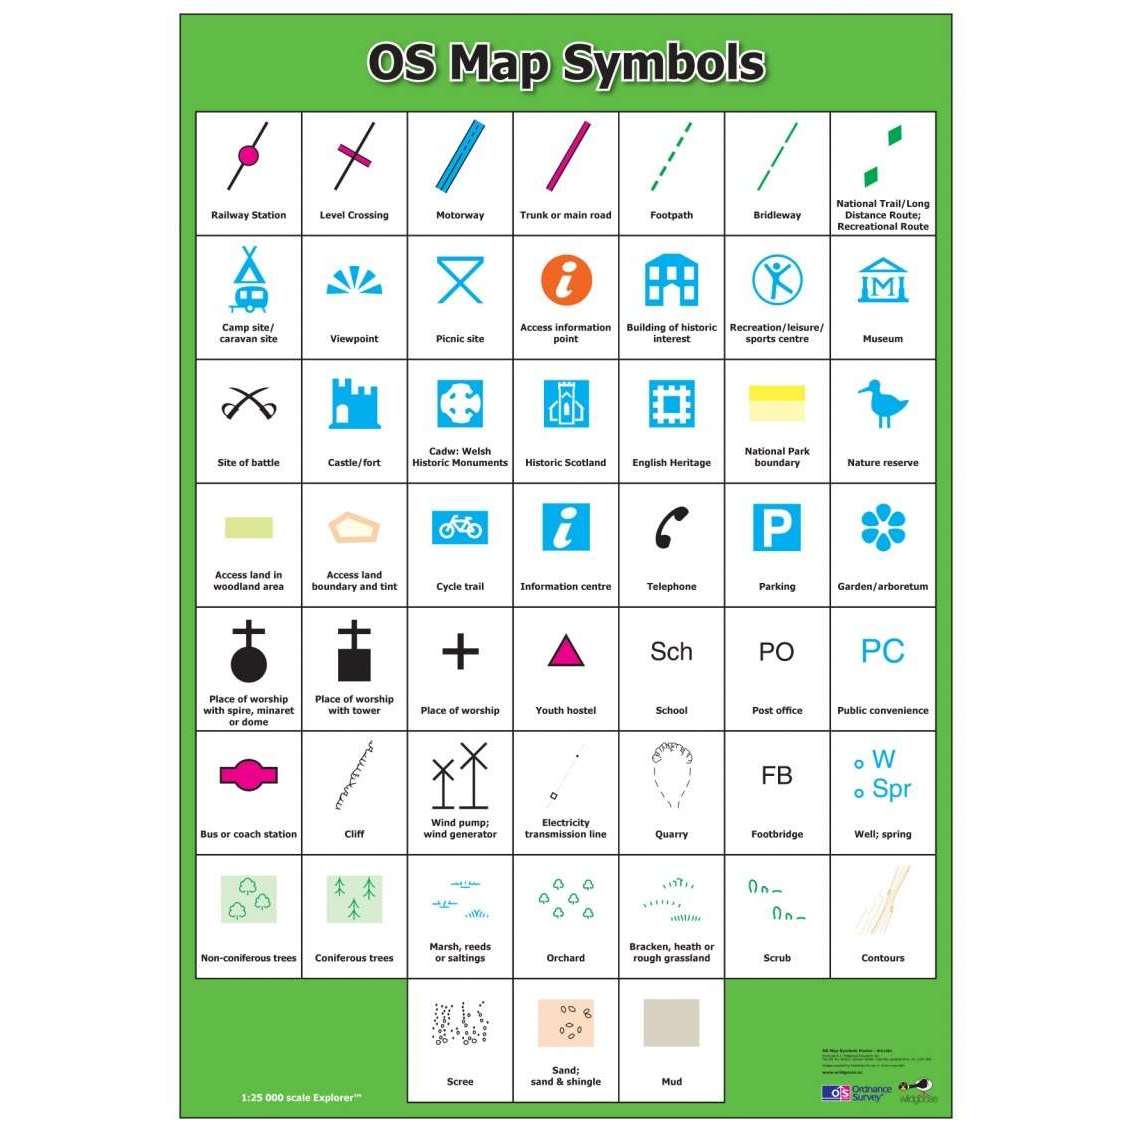 Os Map Symbols Poster Wg4381 15756135 1200x1200 ?v=1590606771